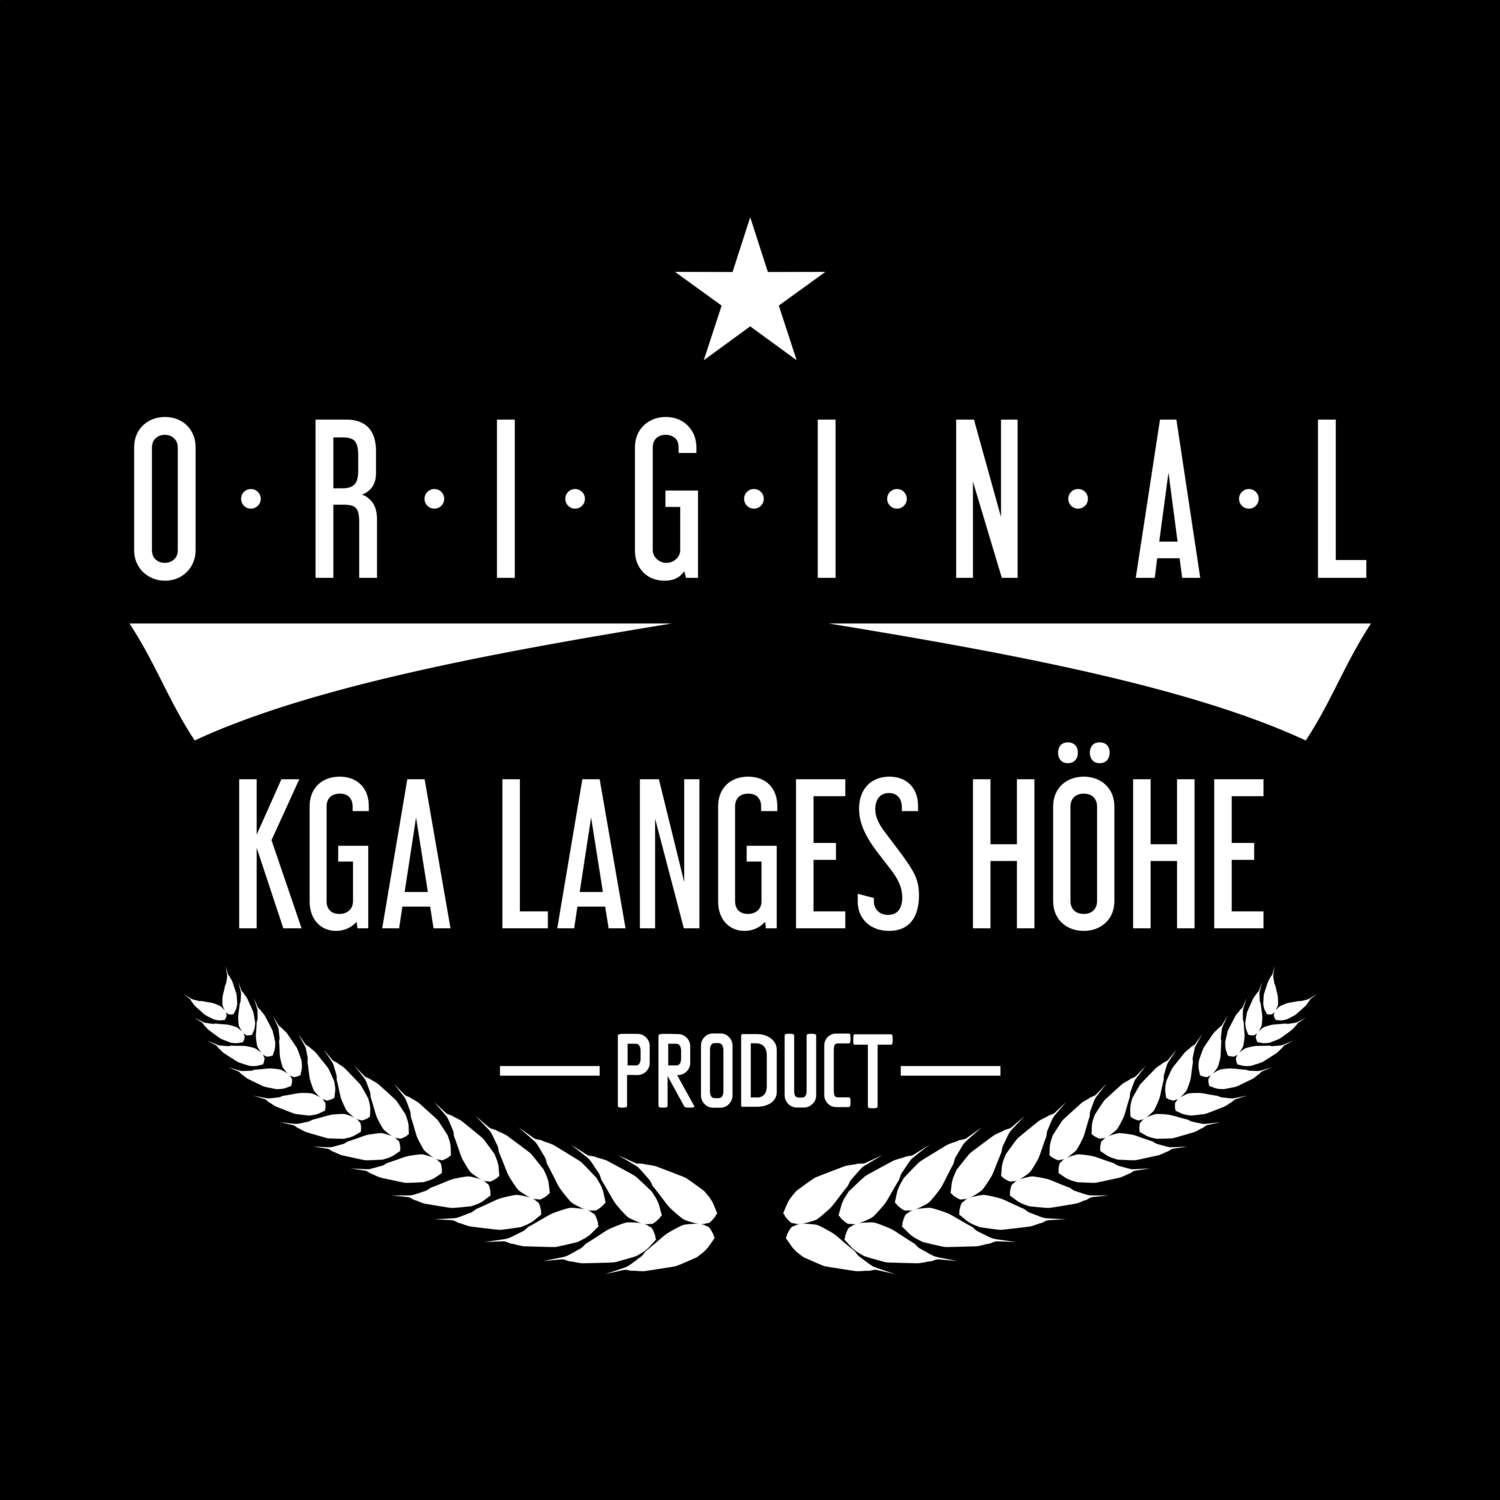 KGA Langes Höhe T-Shirt »Original Product«